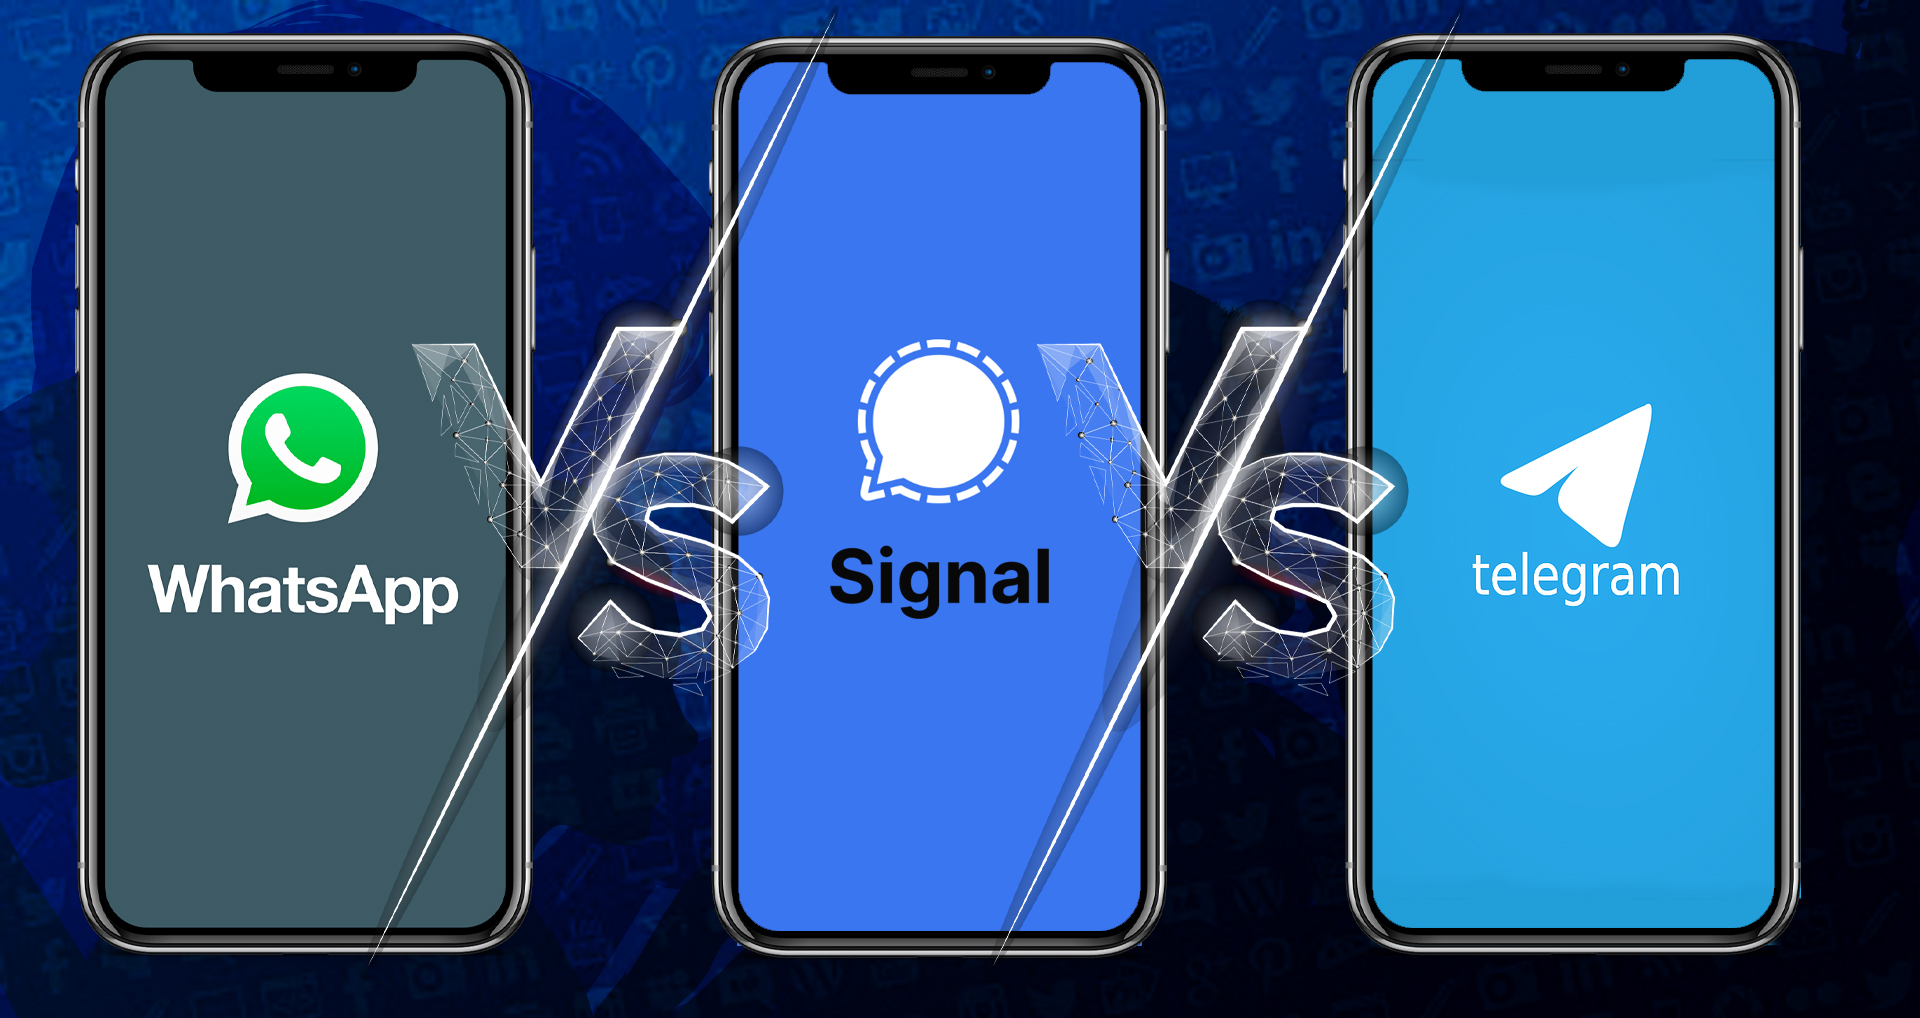 How does Signal beat WhatsApp?